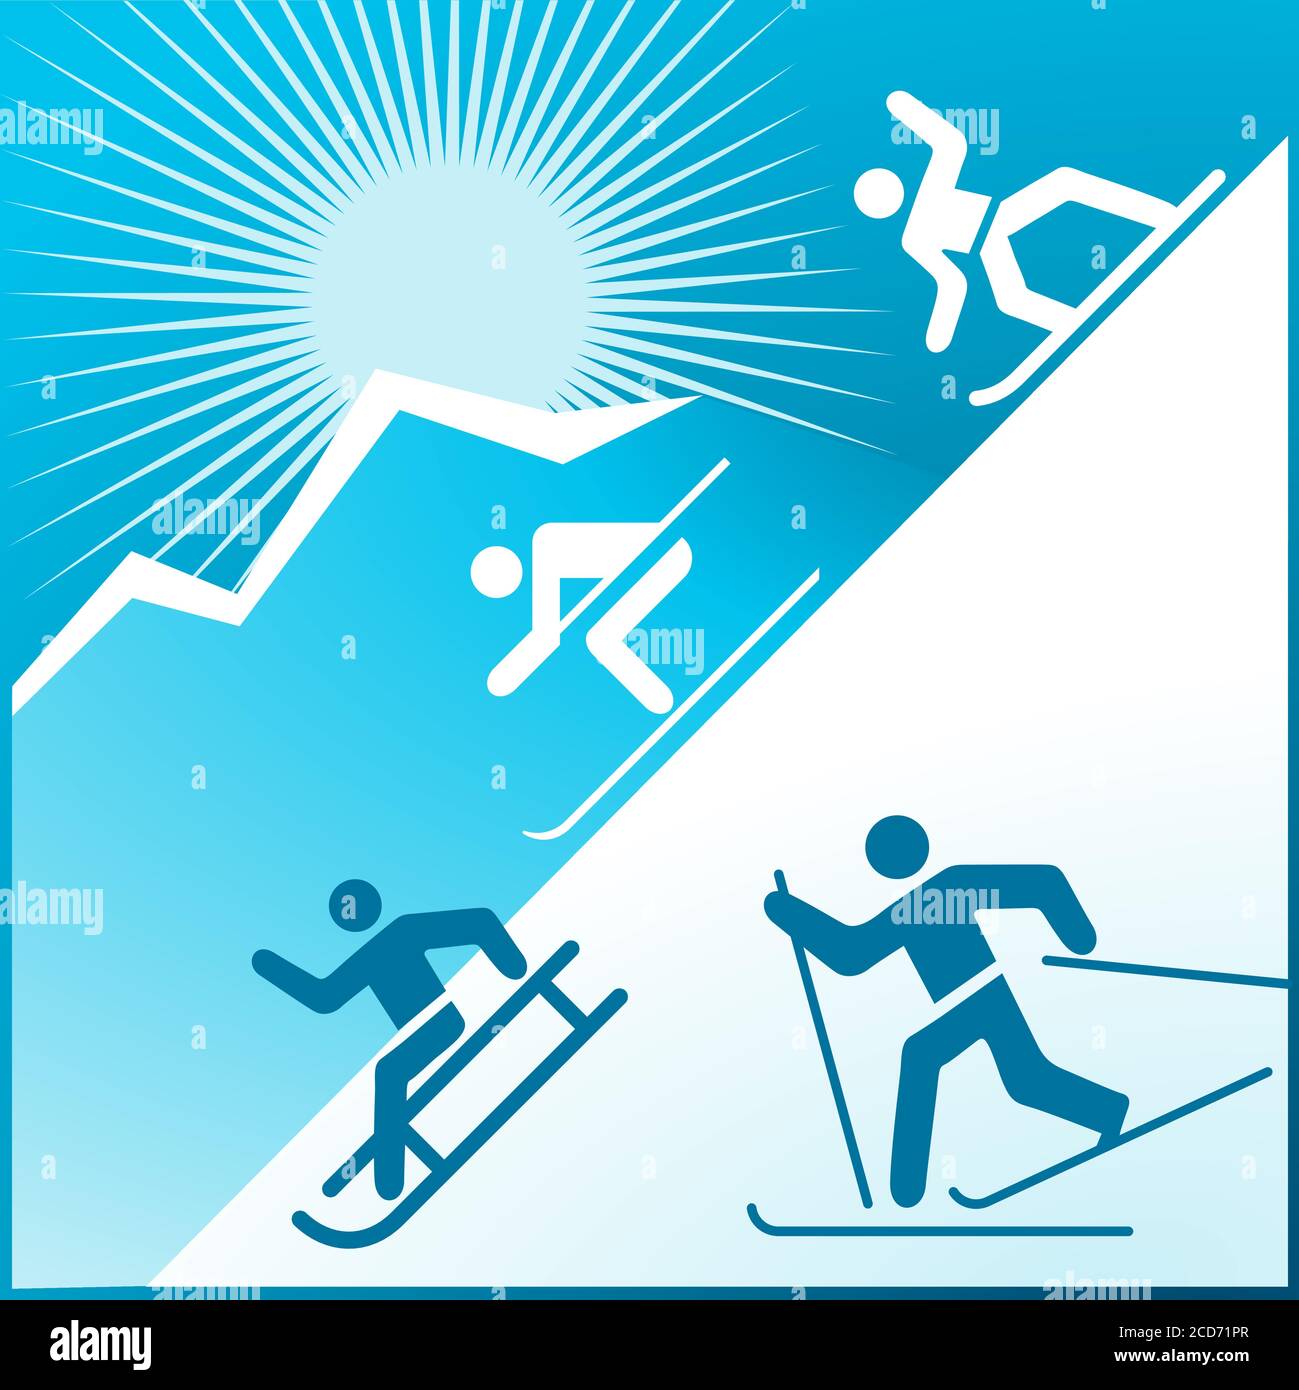 Winter leisure activities icons - vector illustration Stock Vector